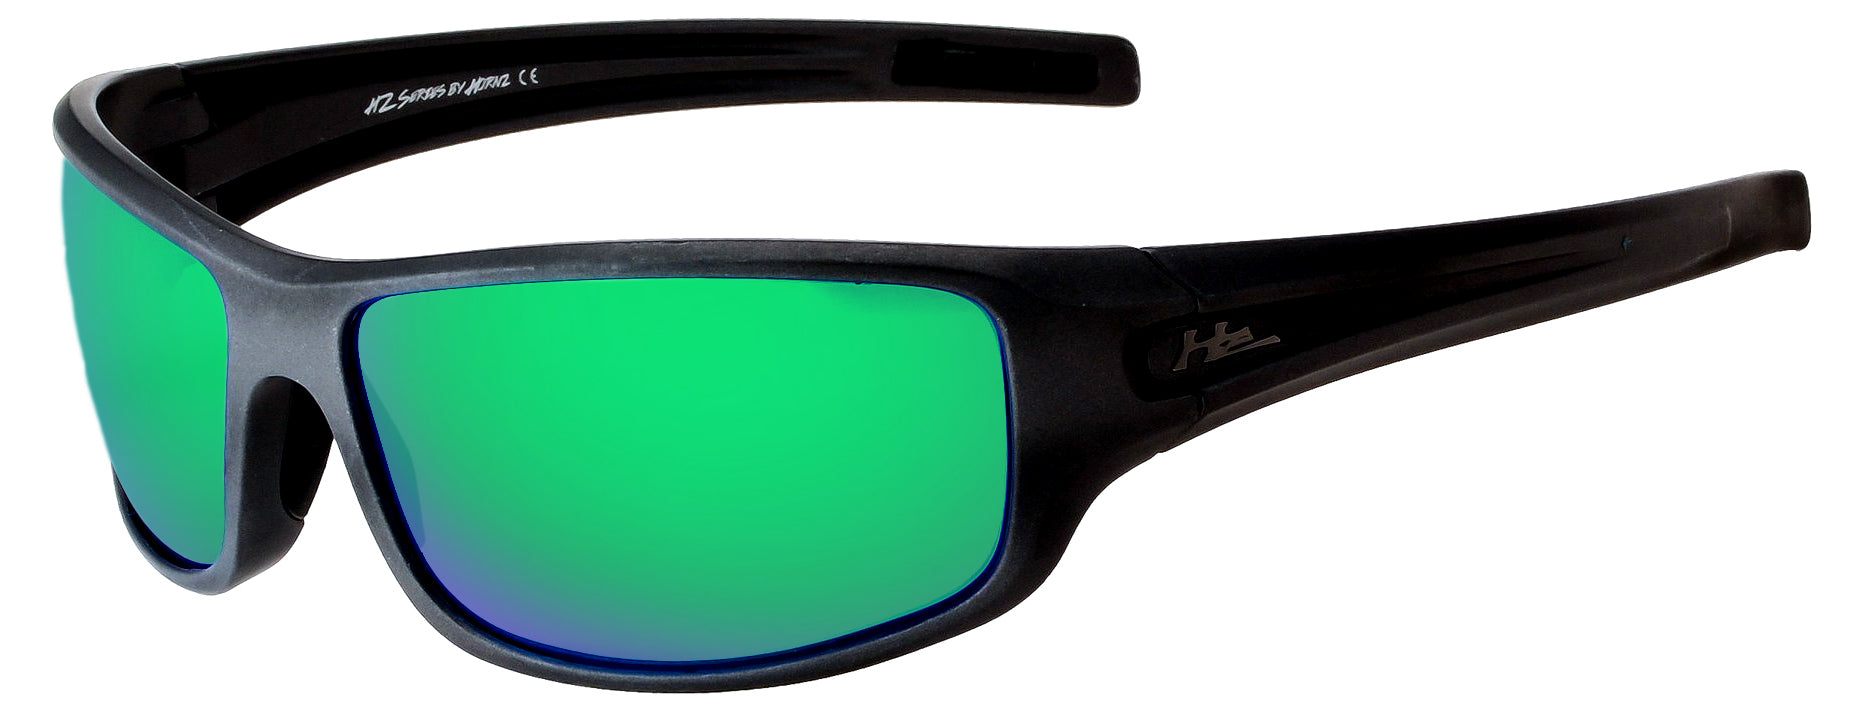 Main image: HZ Series Arkana - Premium Polarized Sunglasses by Hornz (Matte Black, Emerald Green Mirror)